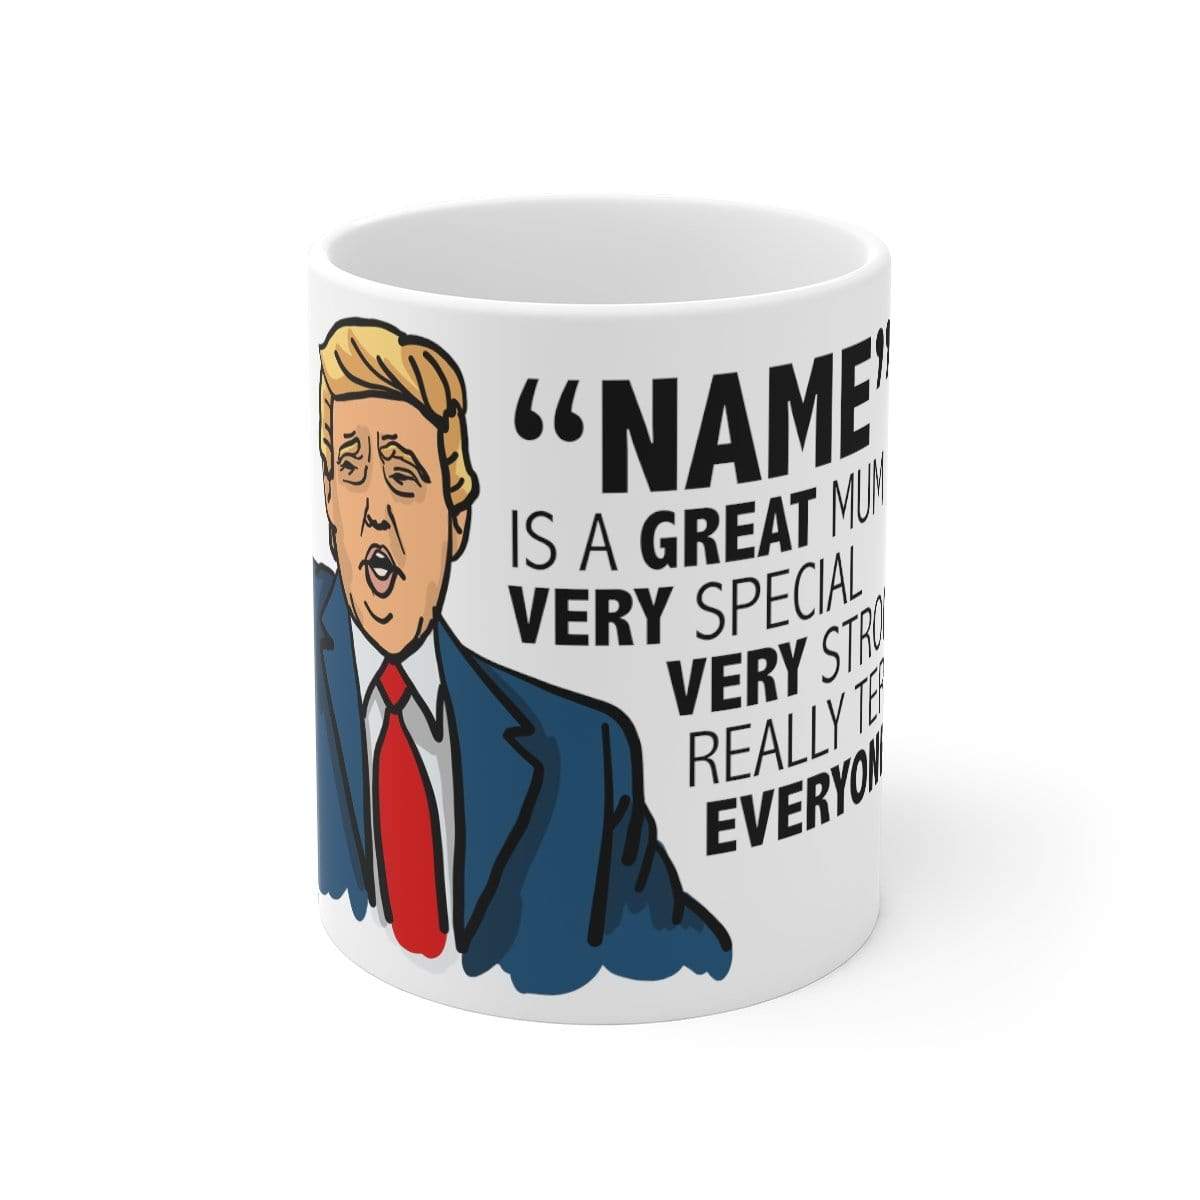 Trump Approves Your Mum 👌 - Customisable Coffee Mug